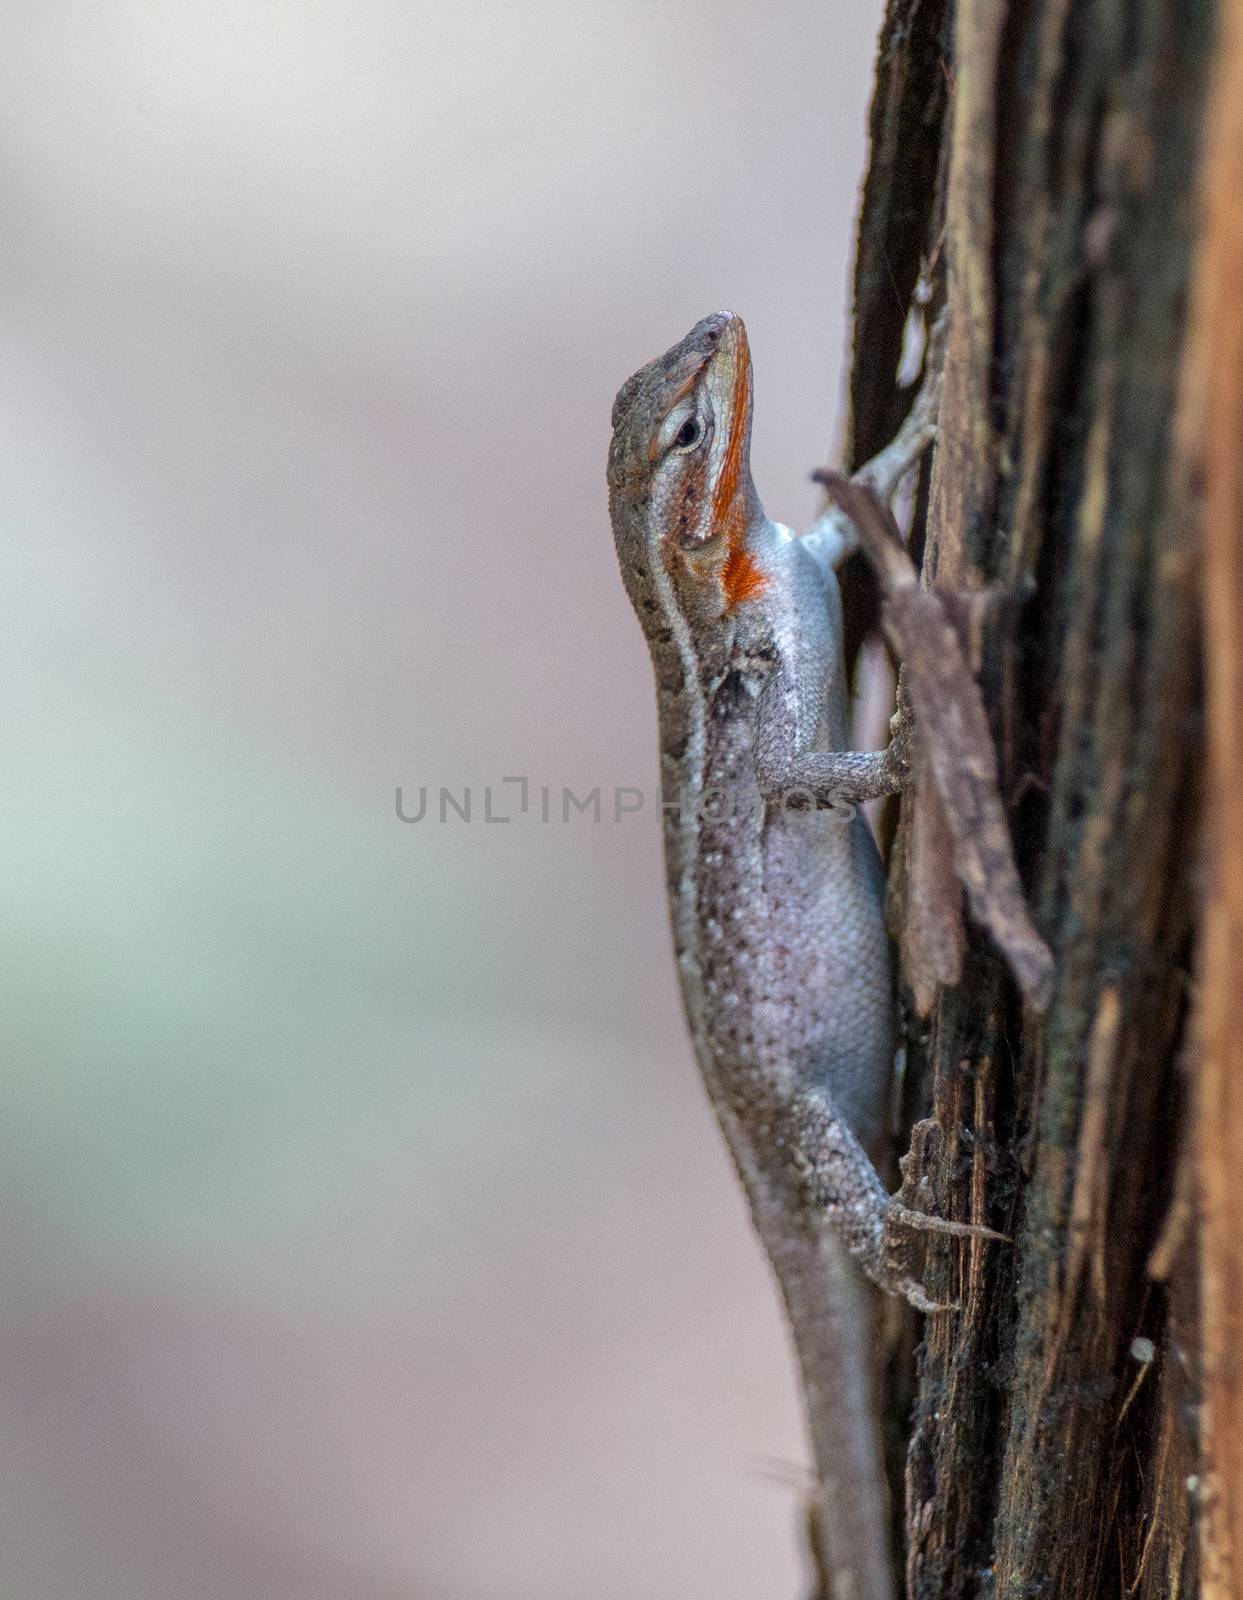 Ornate tree lizard by thomas_males